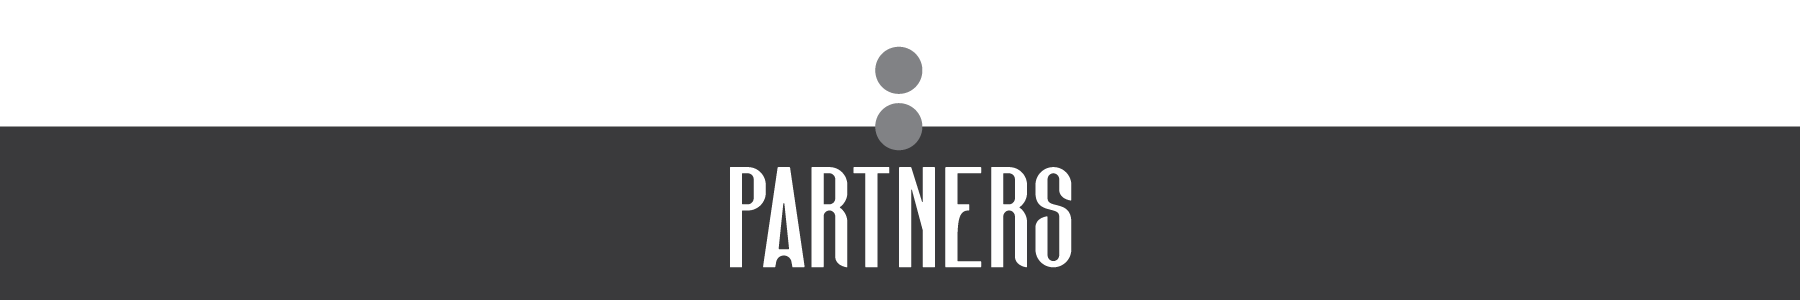 Partners header